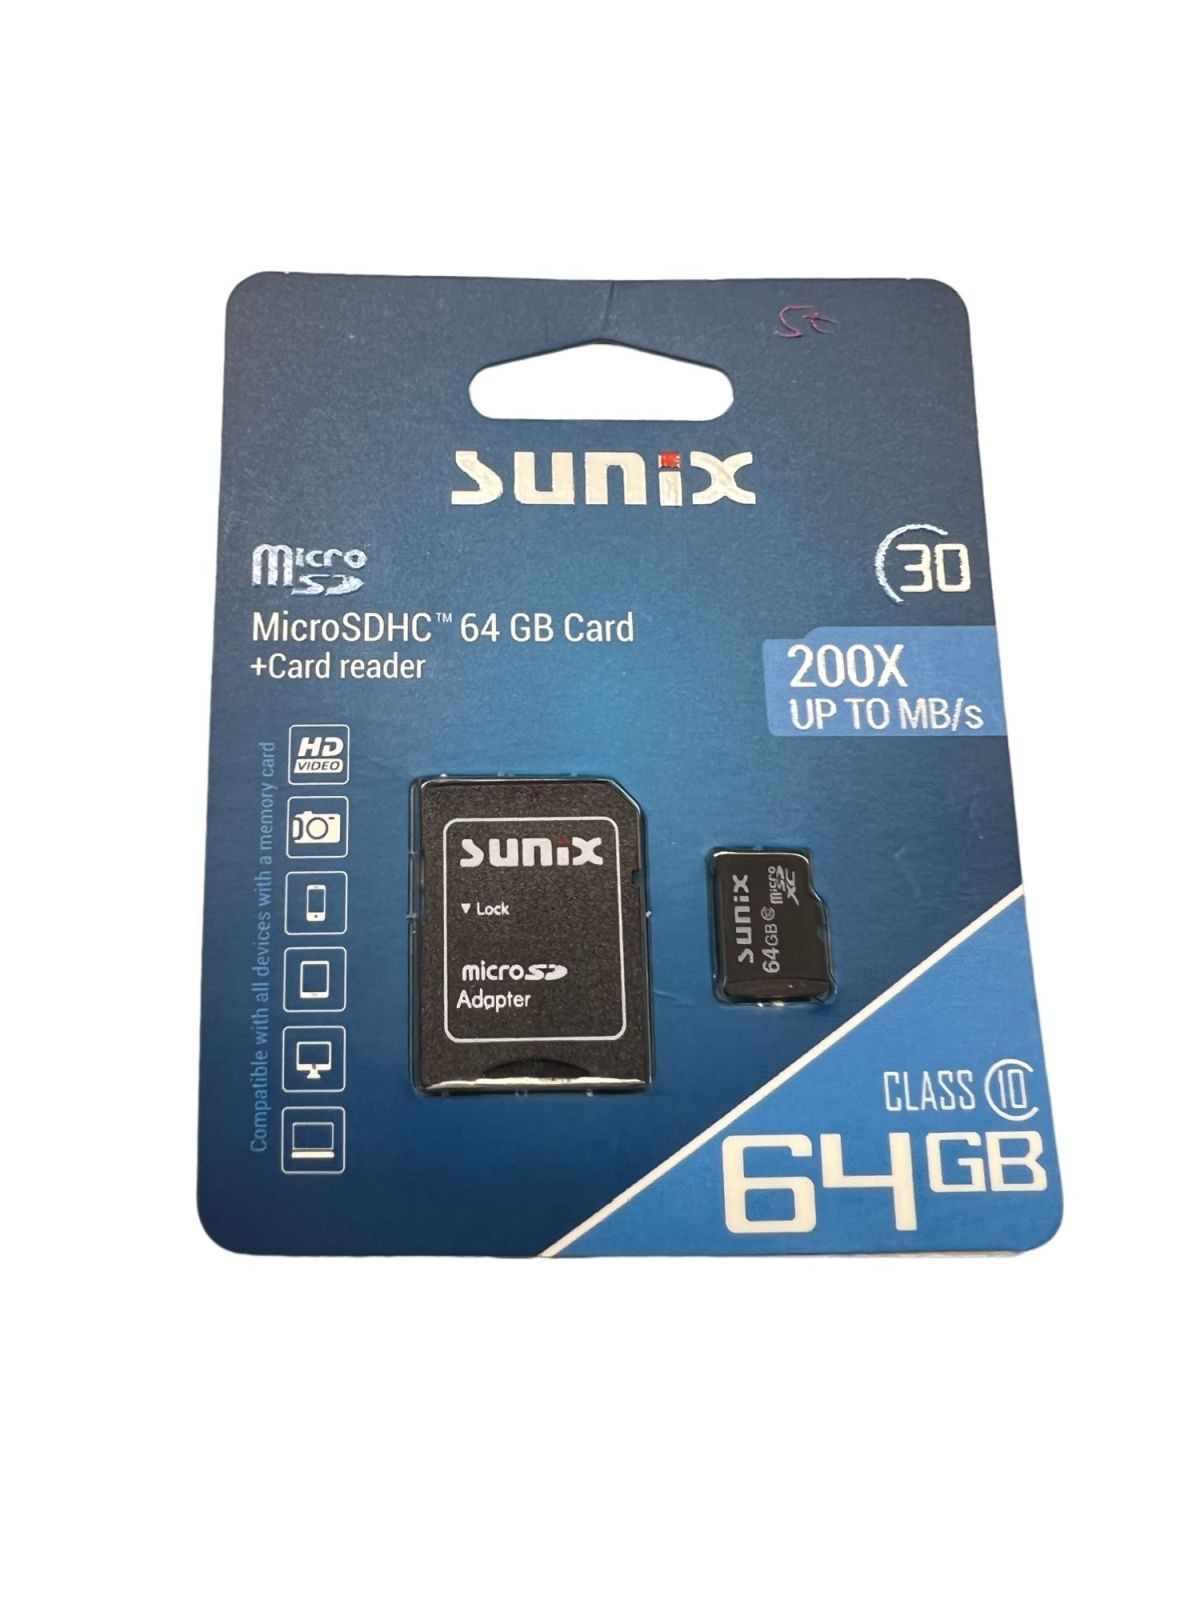 Class Speicherkarte 64 10, GB Karte, Micro-SDHC SUNIX MicroSDHC